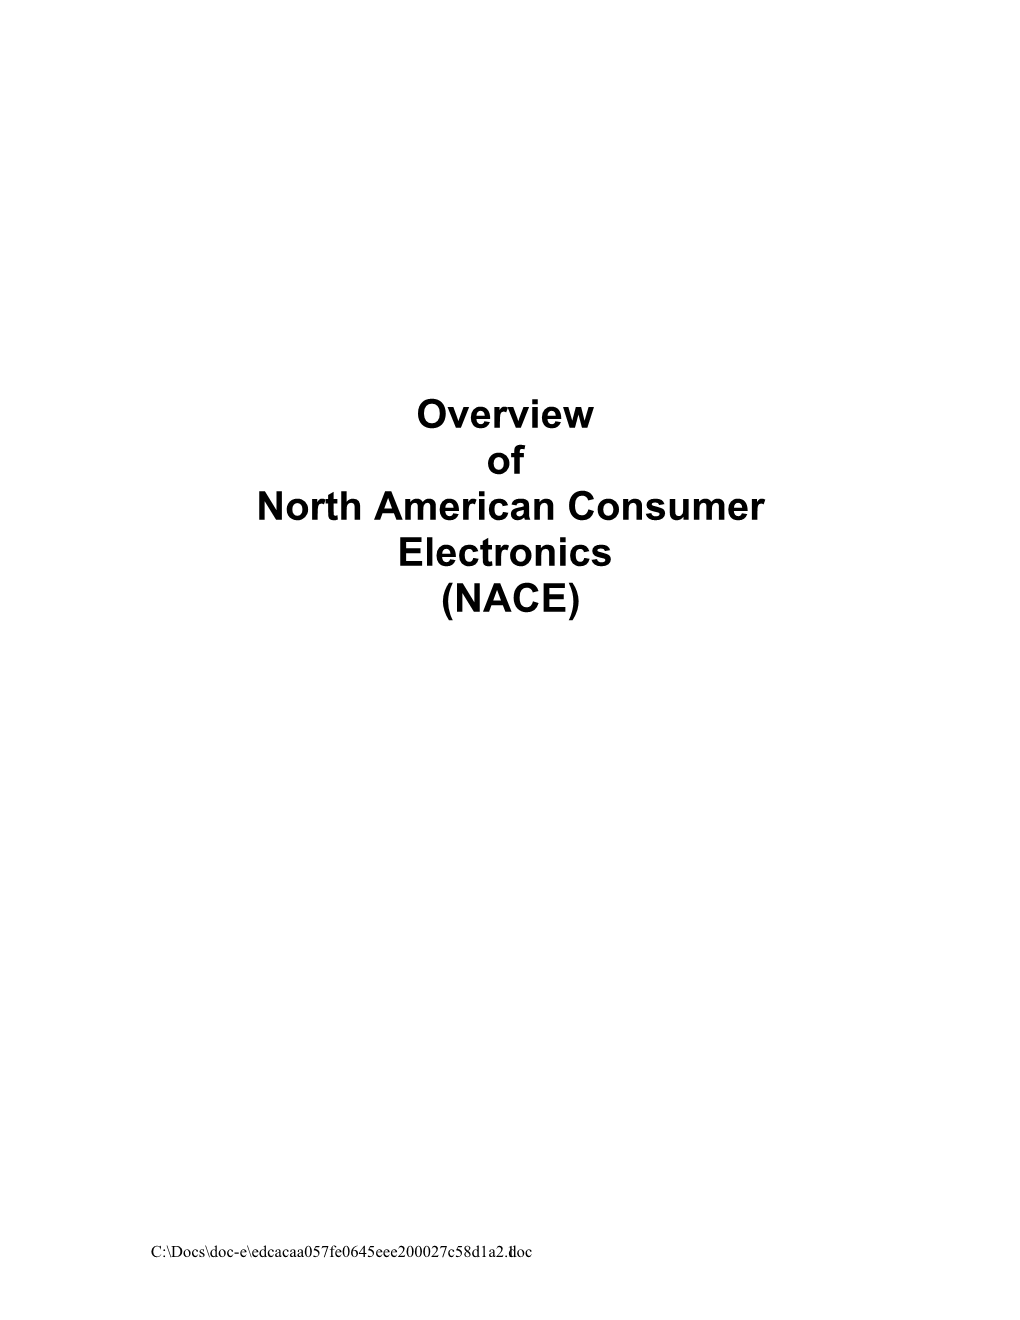 North American Consumer Electronics